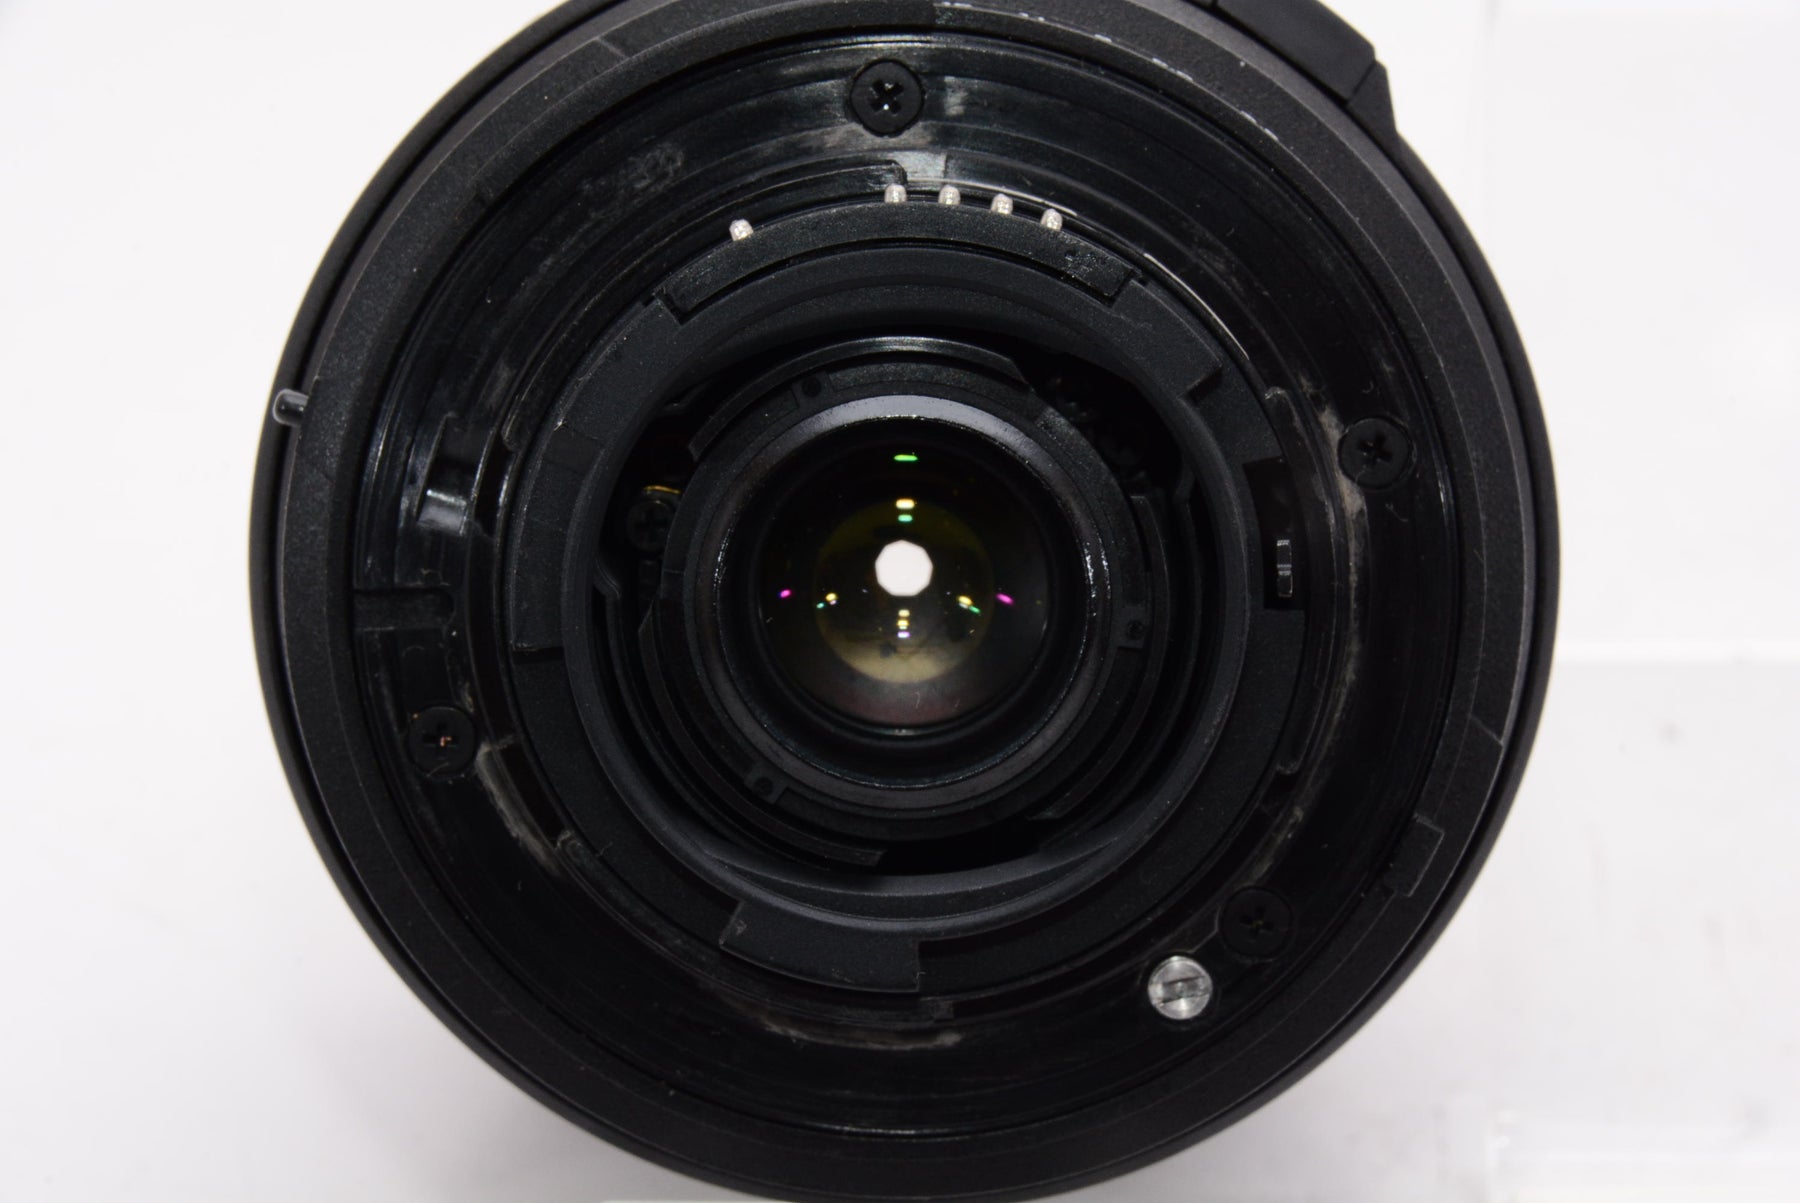 TAMRON AF28-300mm f3.5-6.3 XR Di ニコン用 A061N - カメラ